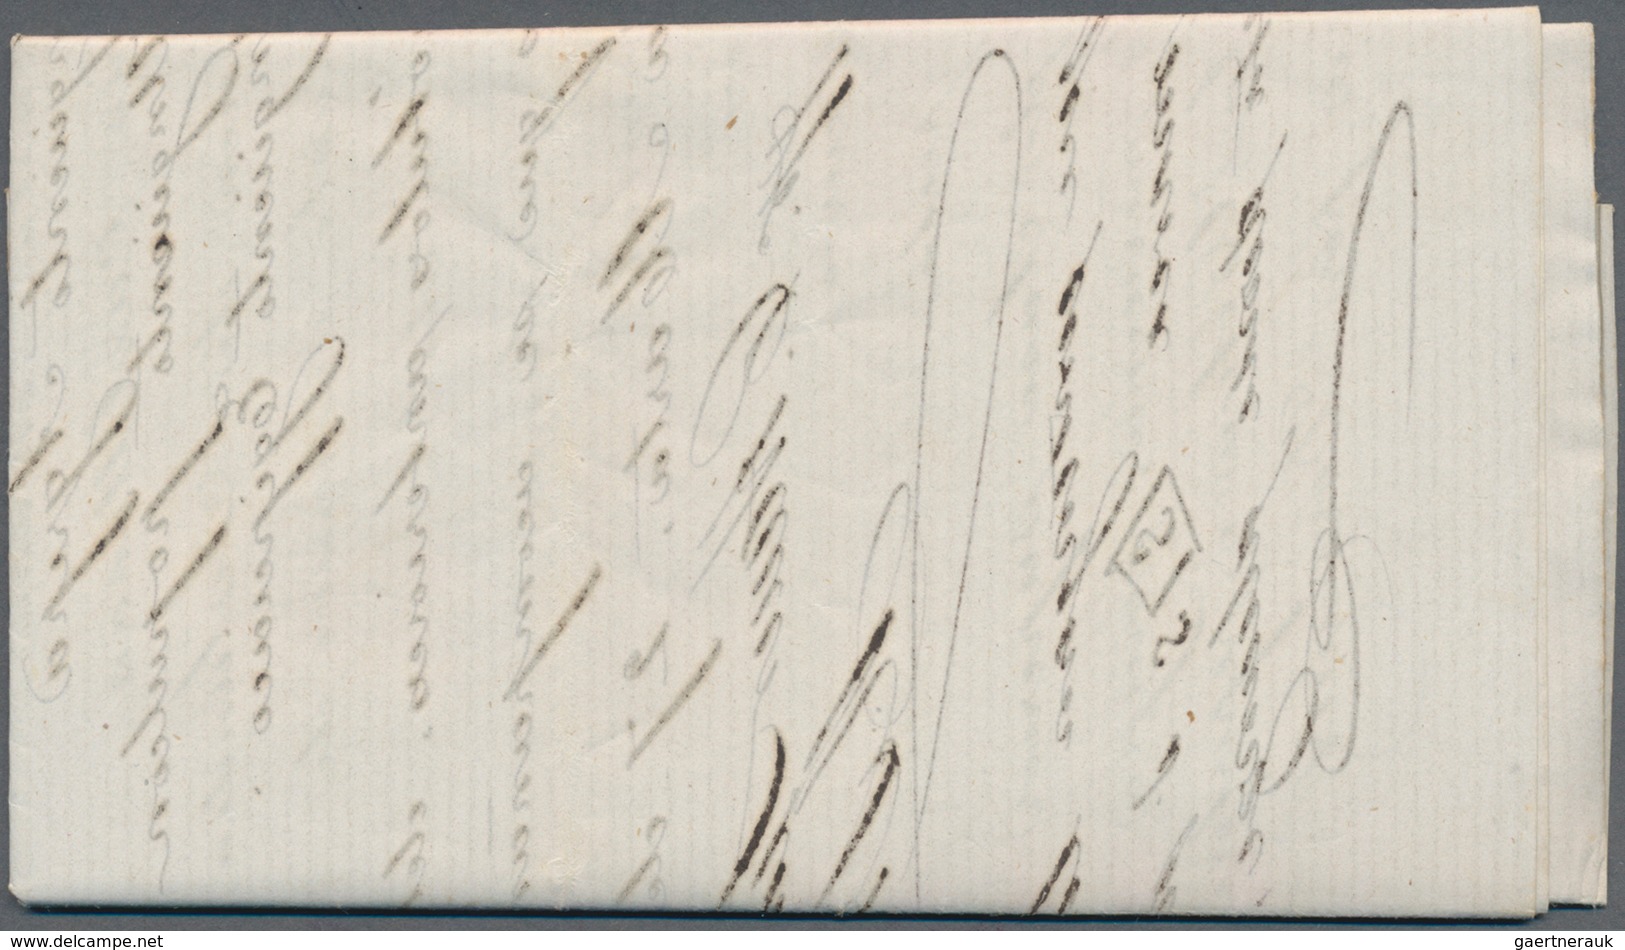 Kolumbien: 1863, Stampless Entire Letter, Dated 27 April, Addresse To Lanman & Kemp, Merchants In NE - Colombia